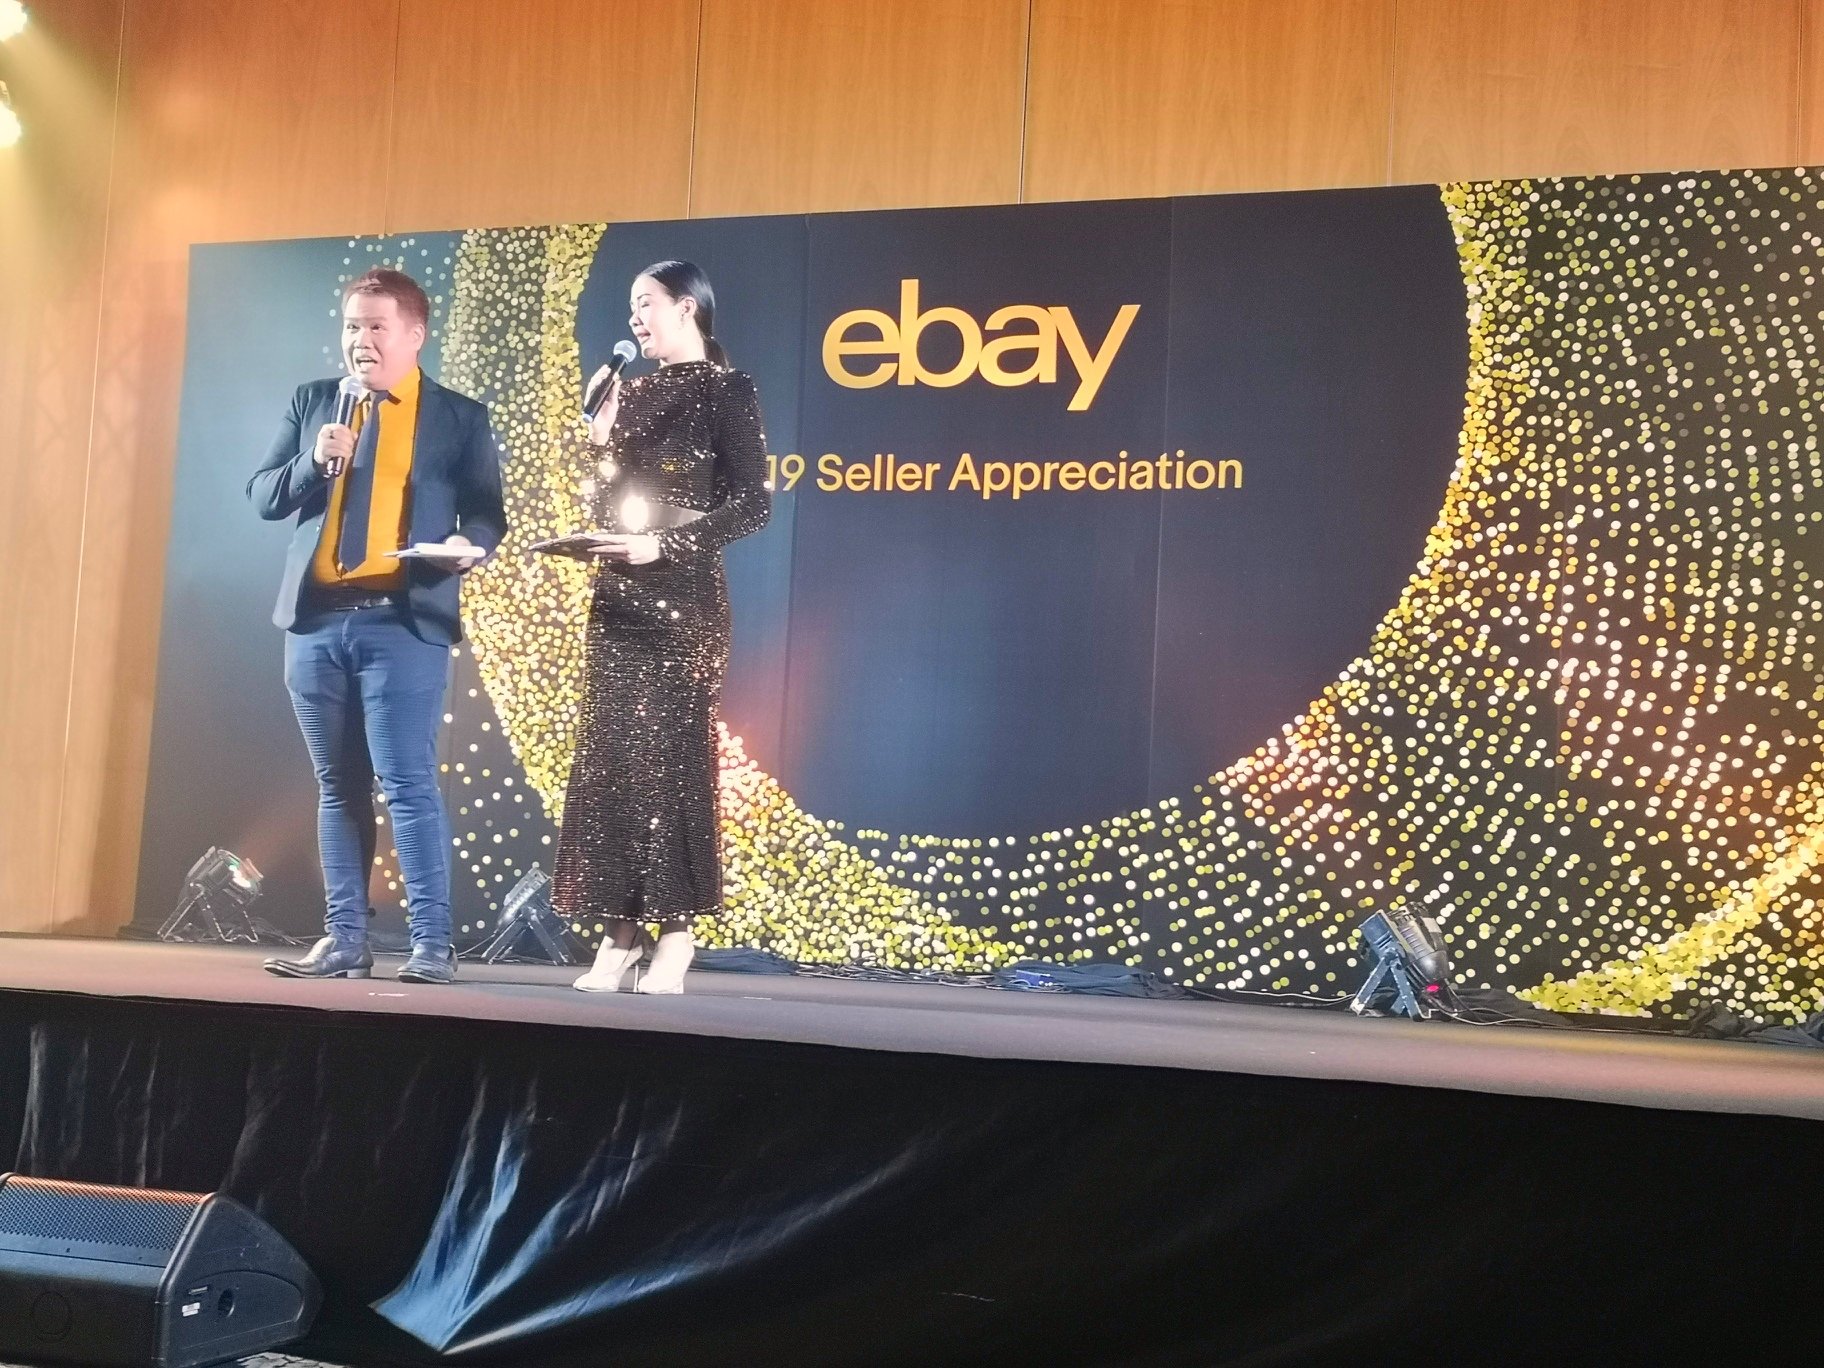 BEZ Parts - Congratulation with eBay Motor Thailand 2019